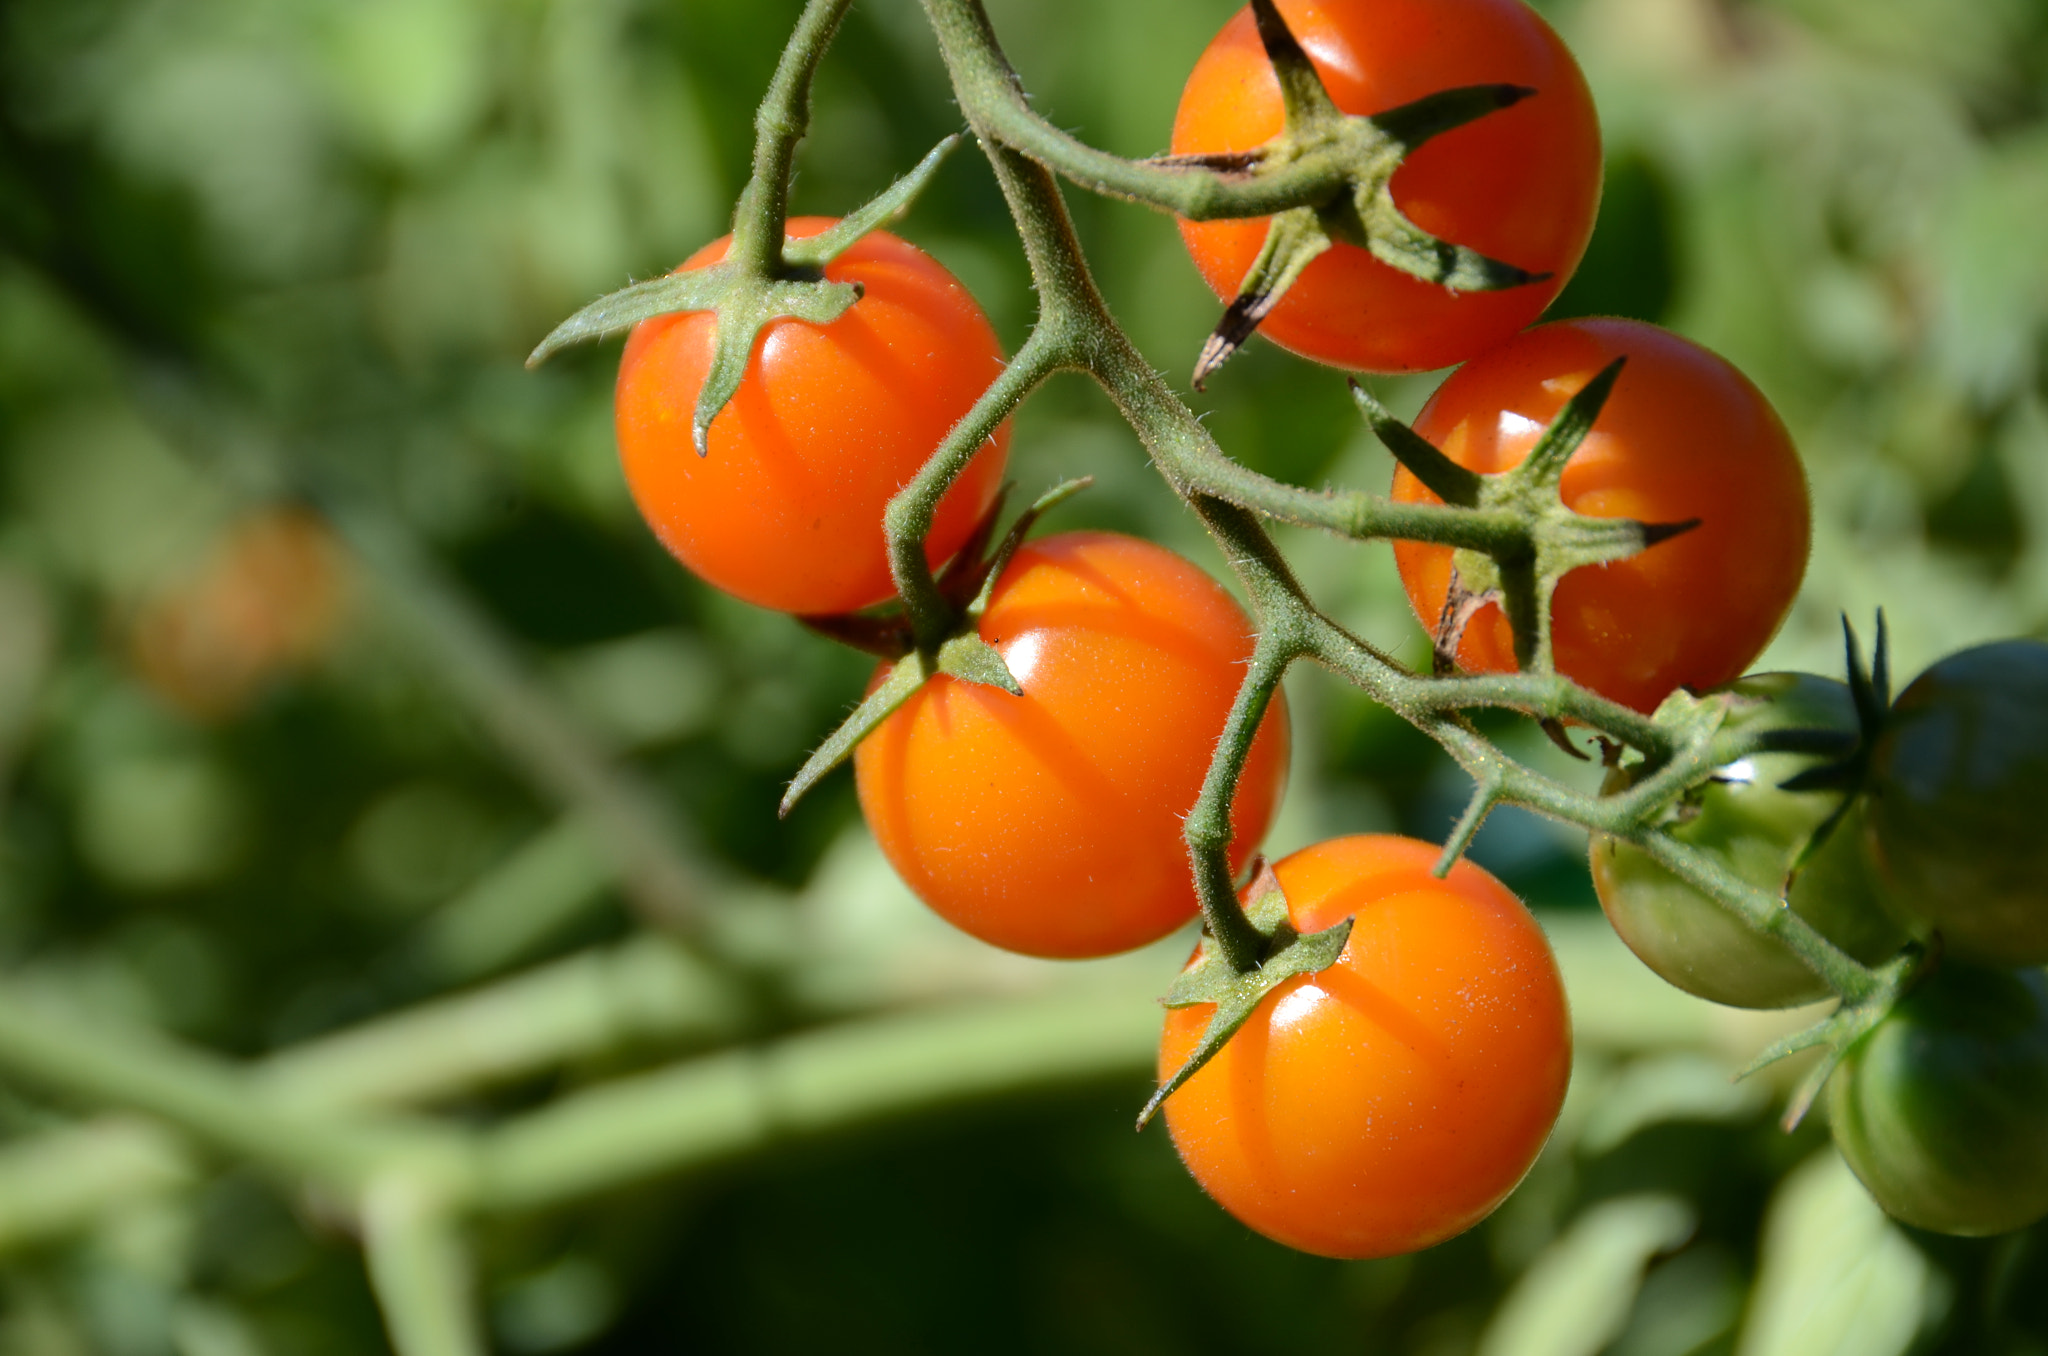 growing tomatoes tips